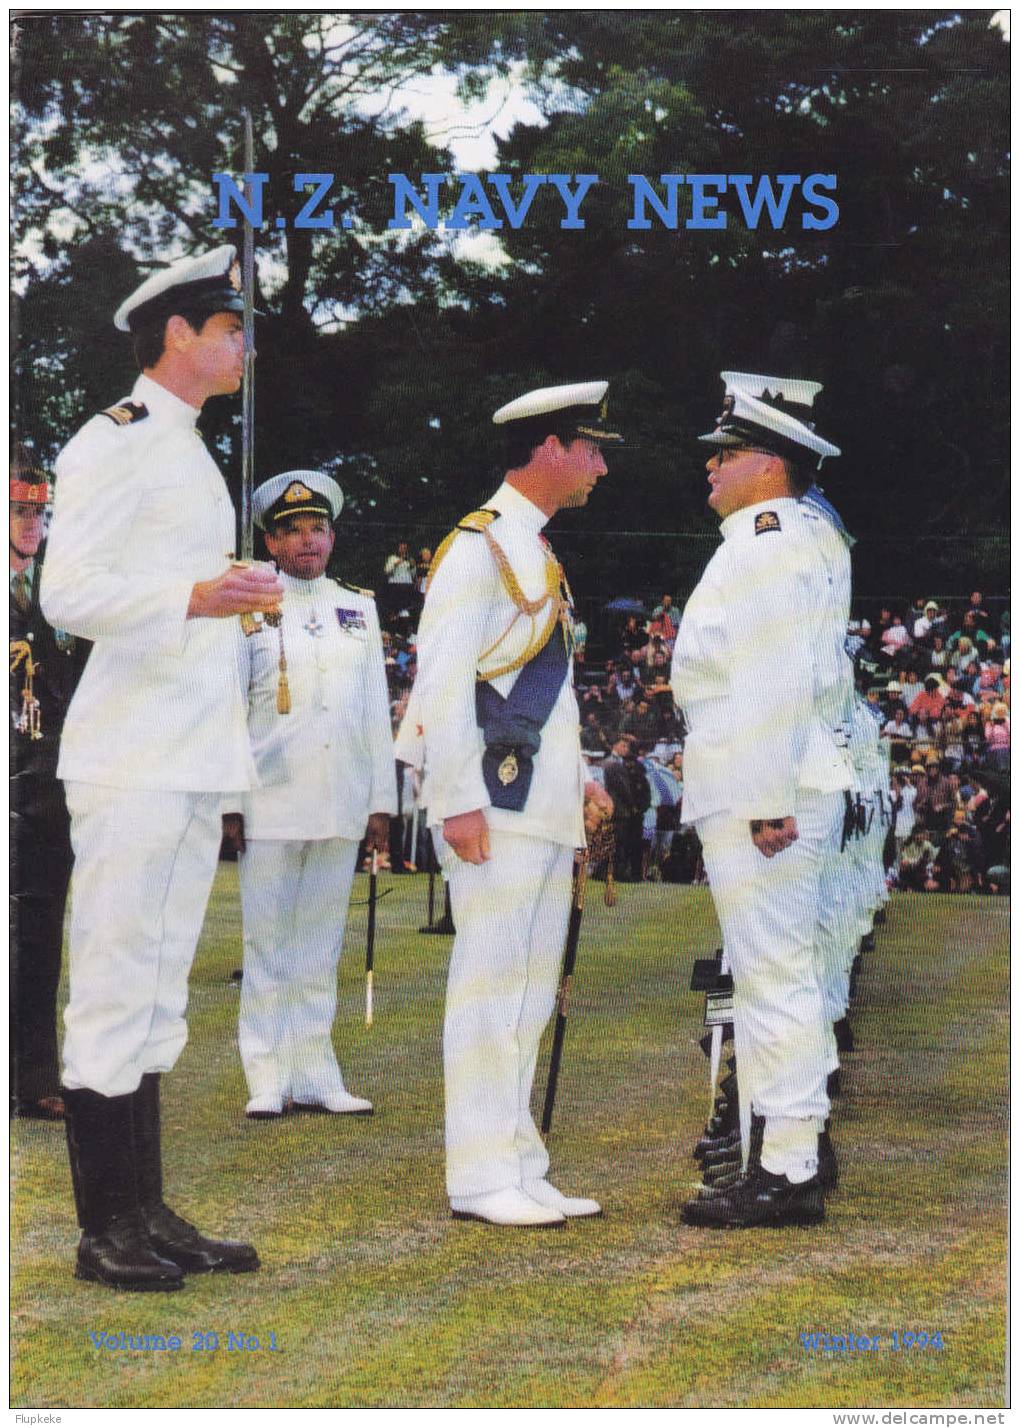 Navy News New Zealand 01 Vol 20 Winter 1994 - Esercito/Guerra